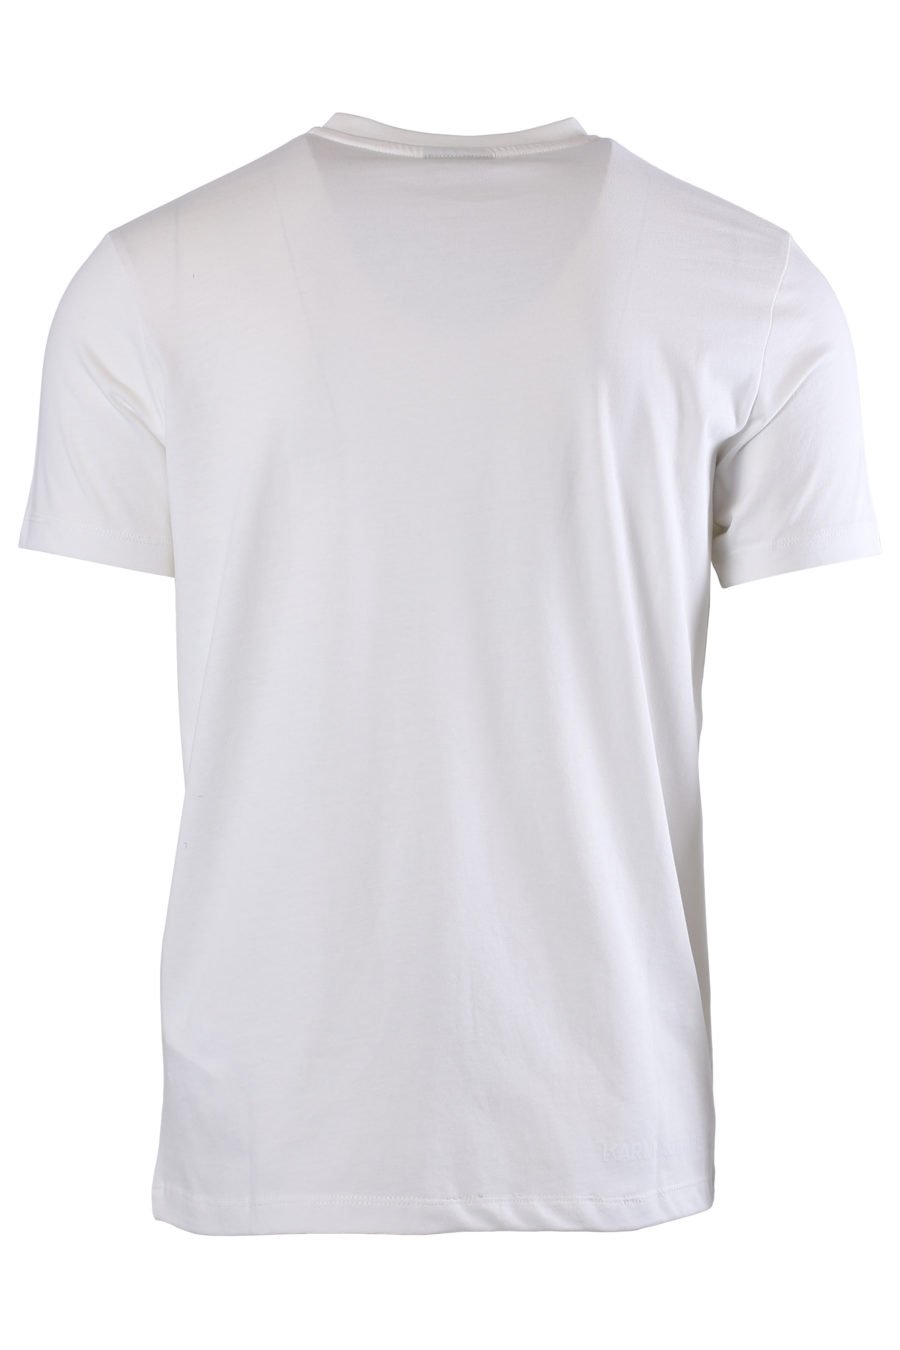 T-shirt branca com logótipo lateral em relevo - IMG 0585